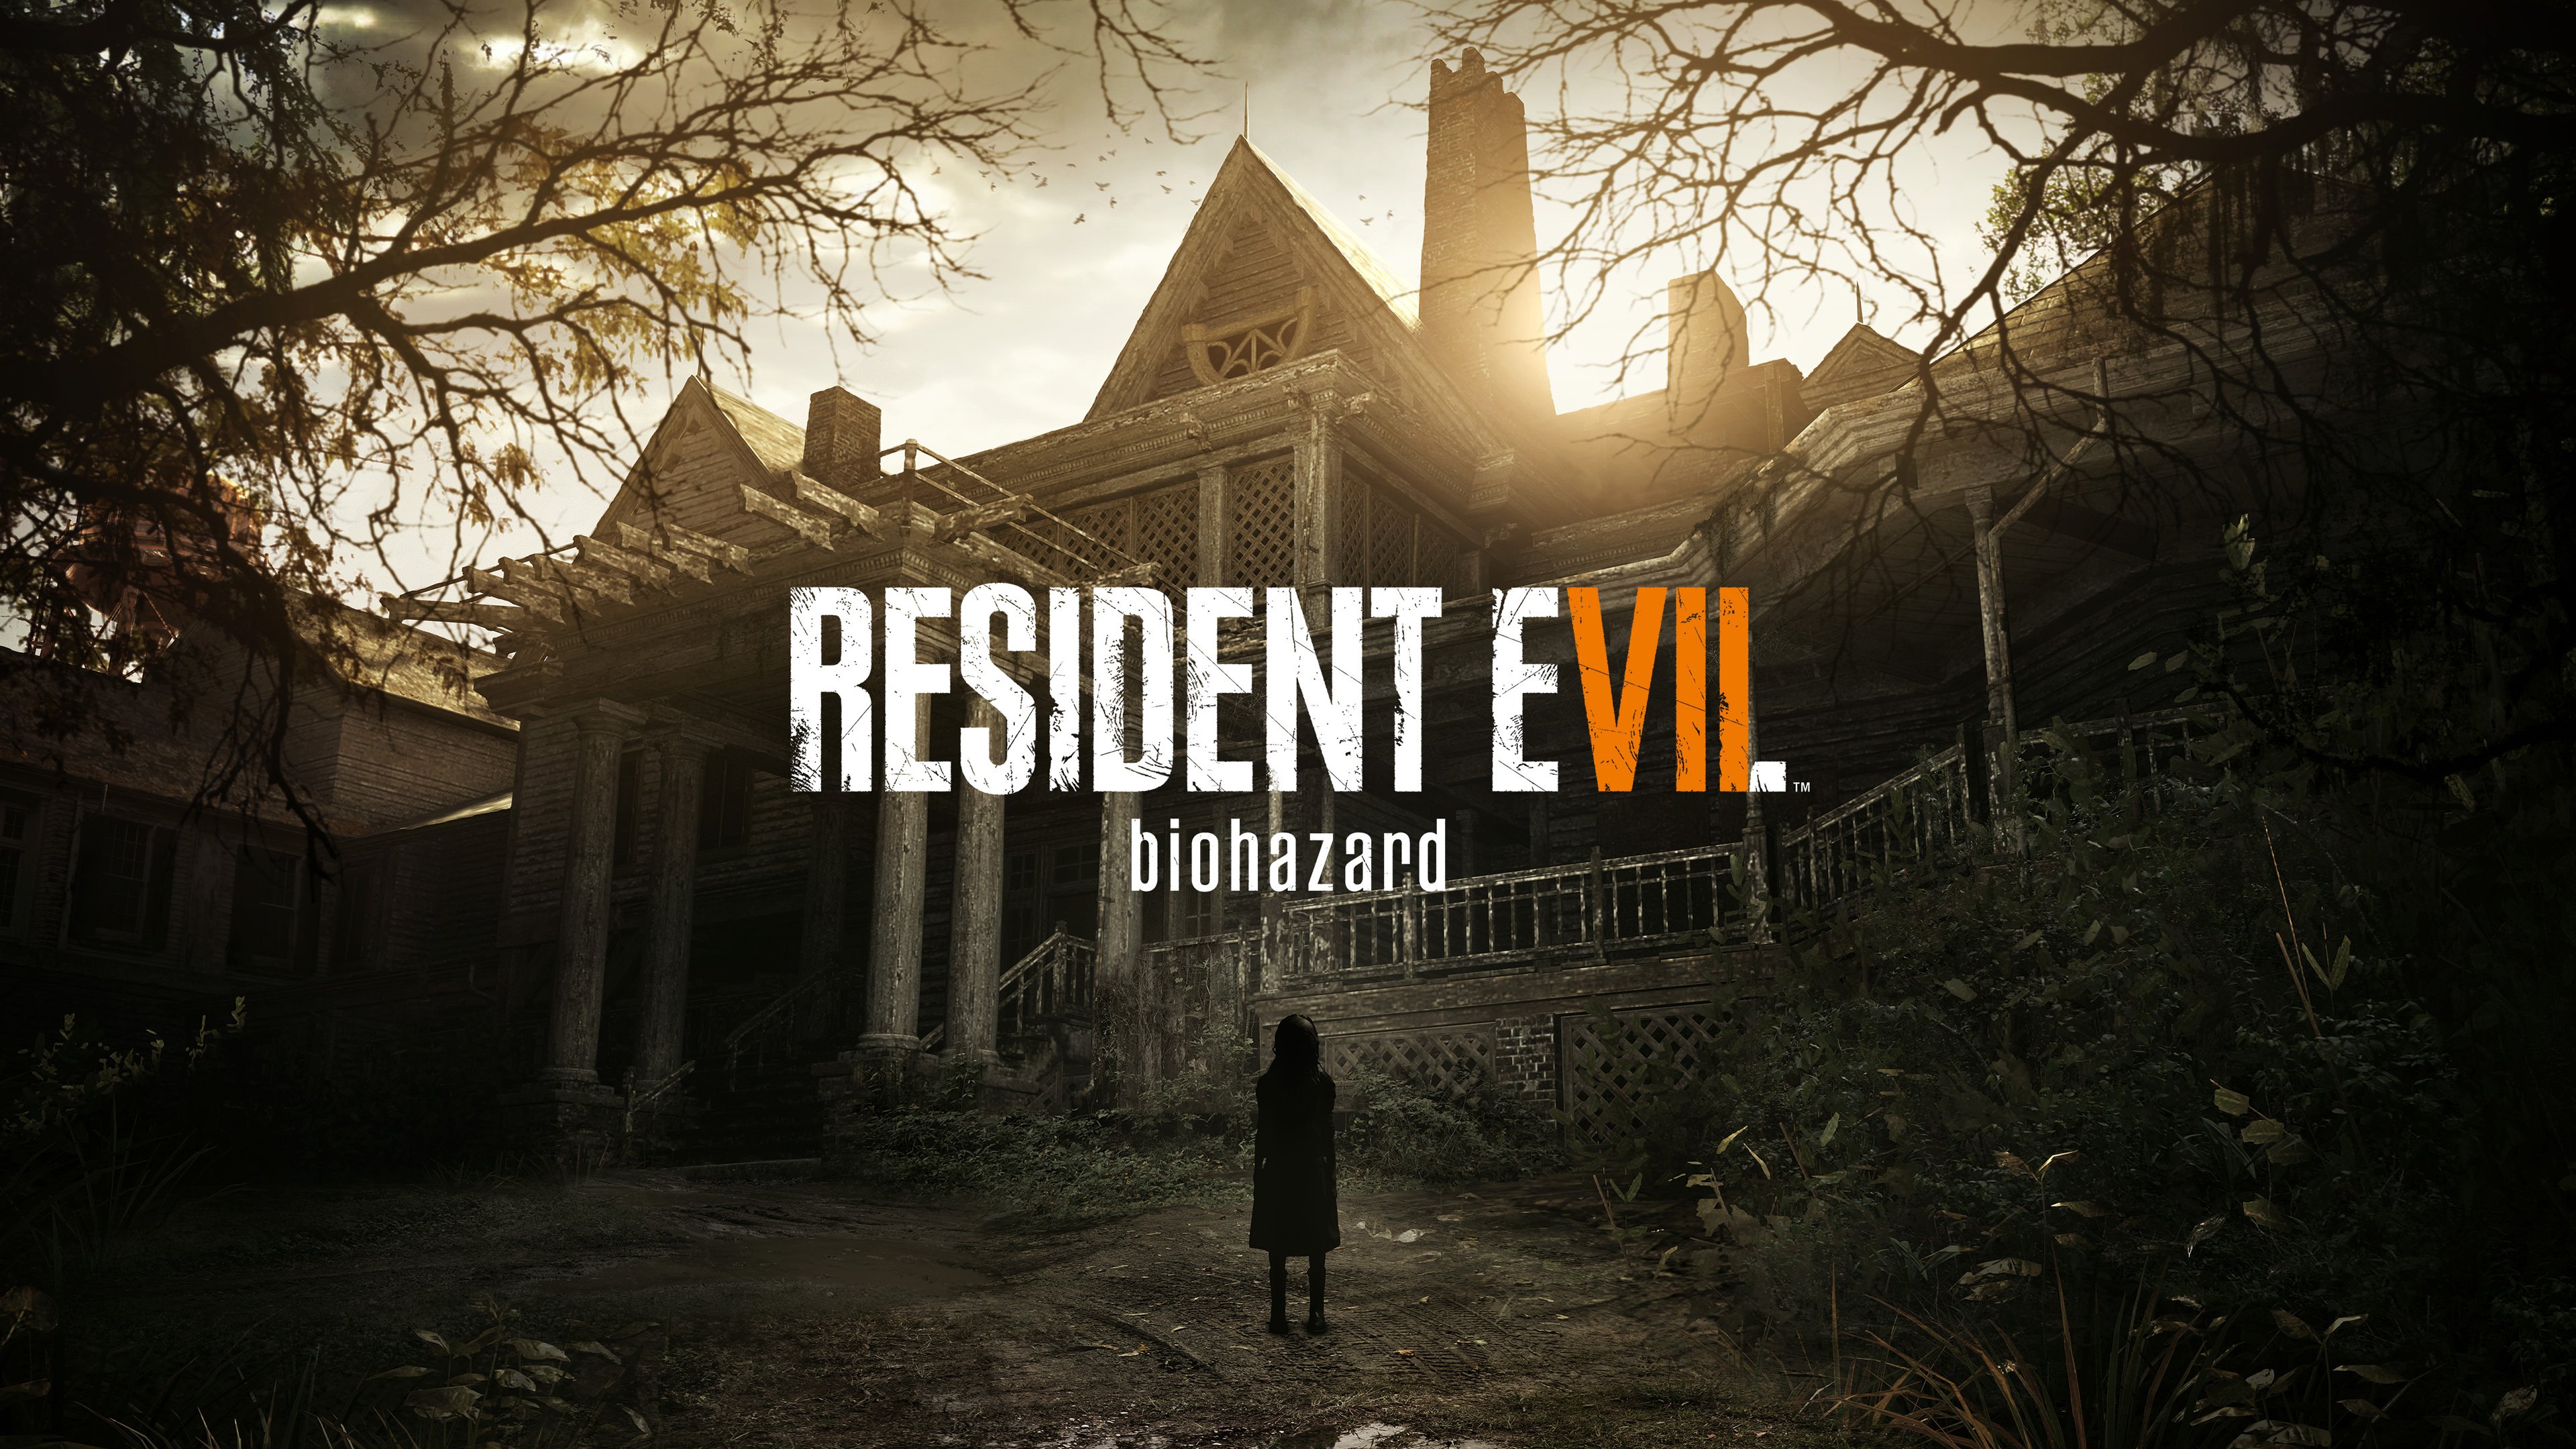 Resident Evil 7 biohazard будет эксклюзивом для PlayStation VR целый год